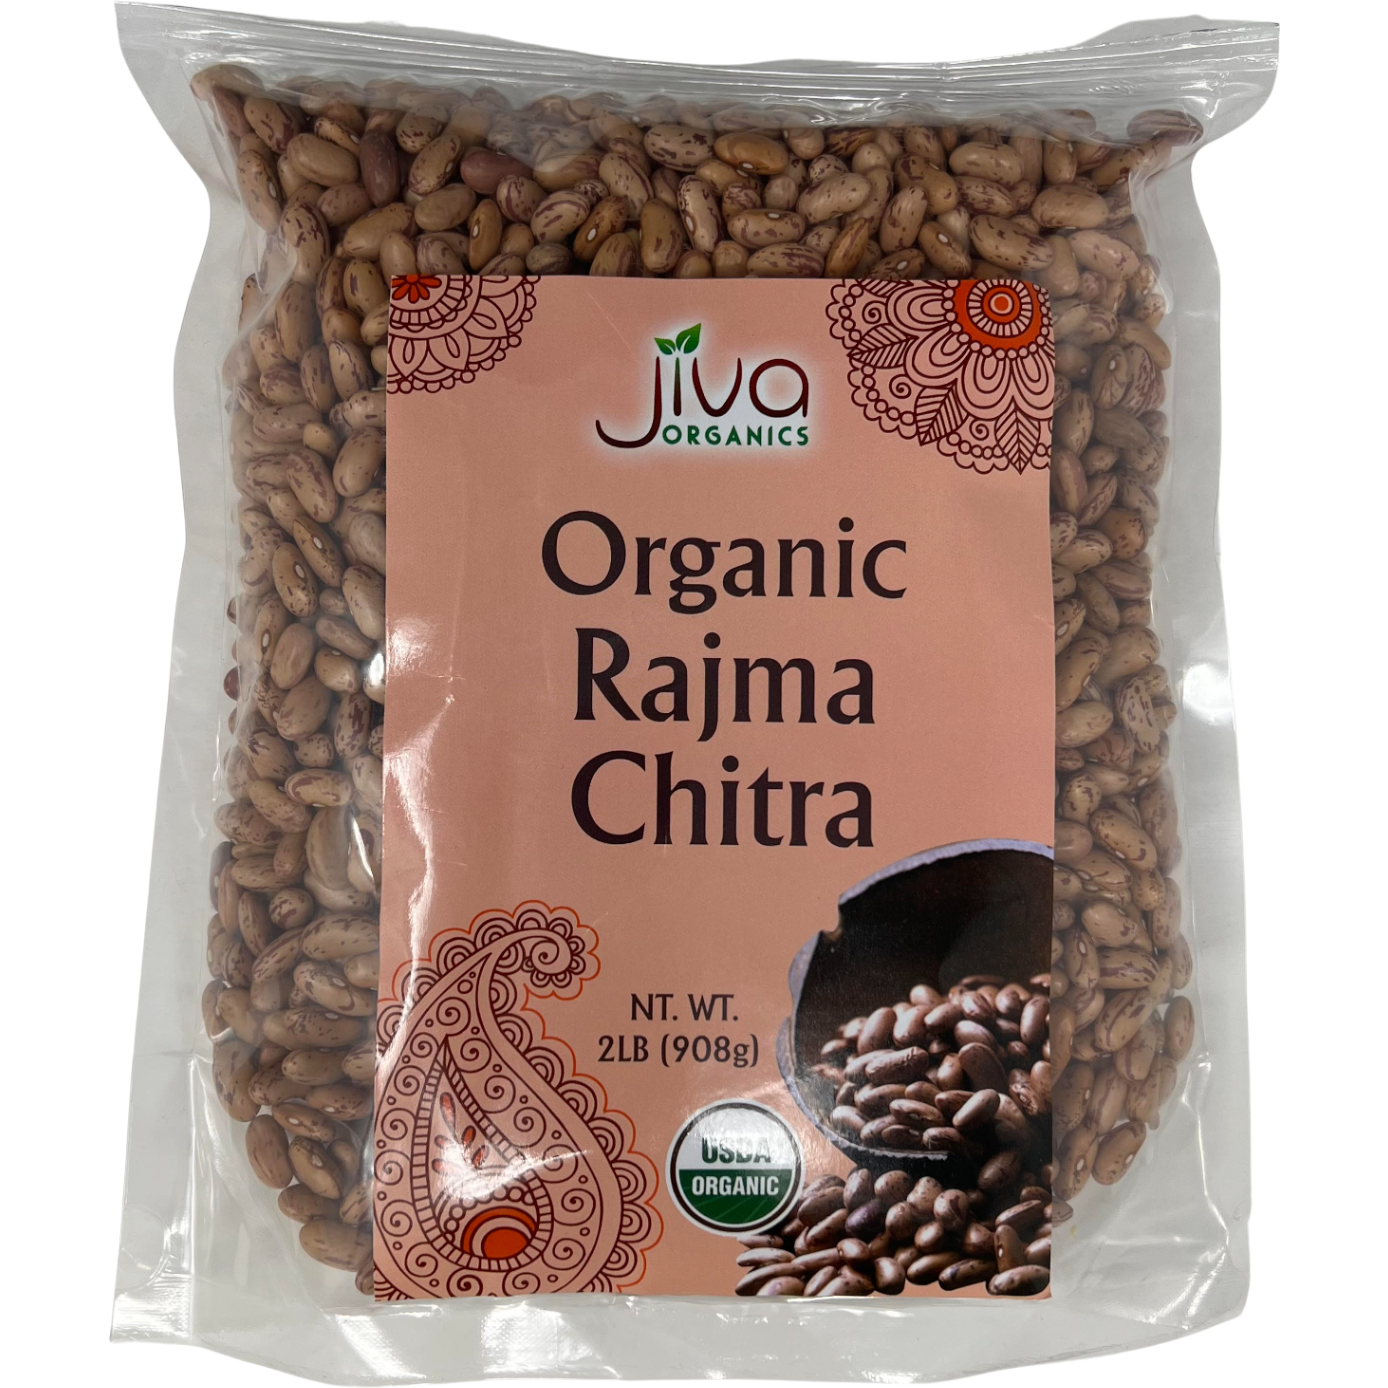 Case of 12 - Jiva Organics Organic Rajma Chitra - 2 Lb (908 Gm) [50% Off]